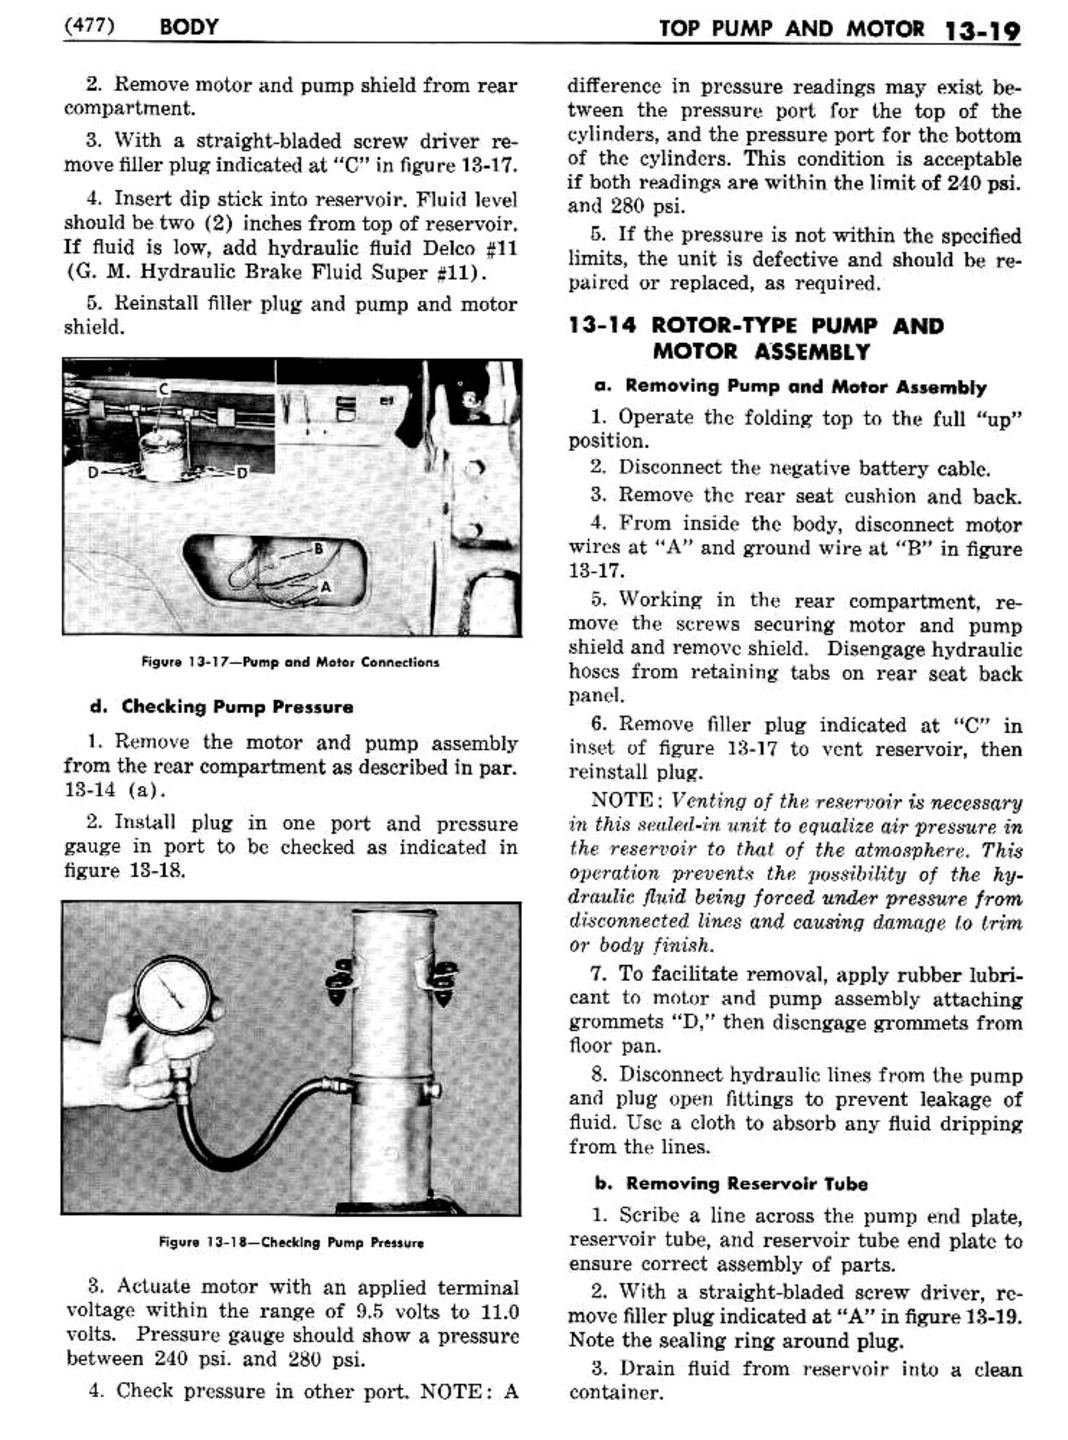 n_14 1956 Buick Shop Manual - Body-019-019.jpg